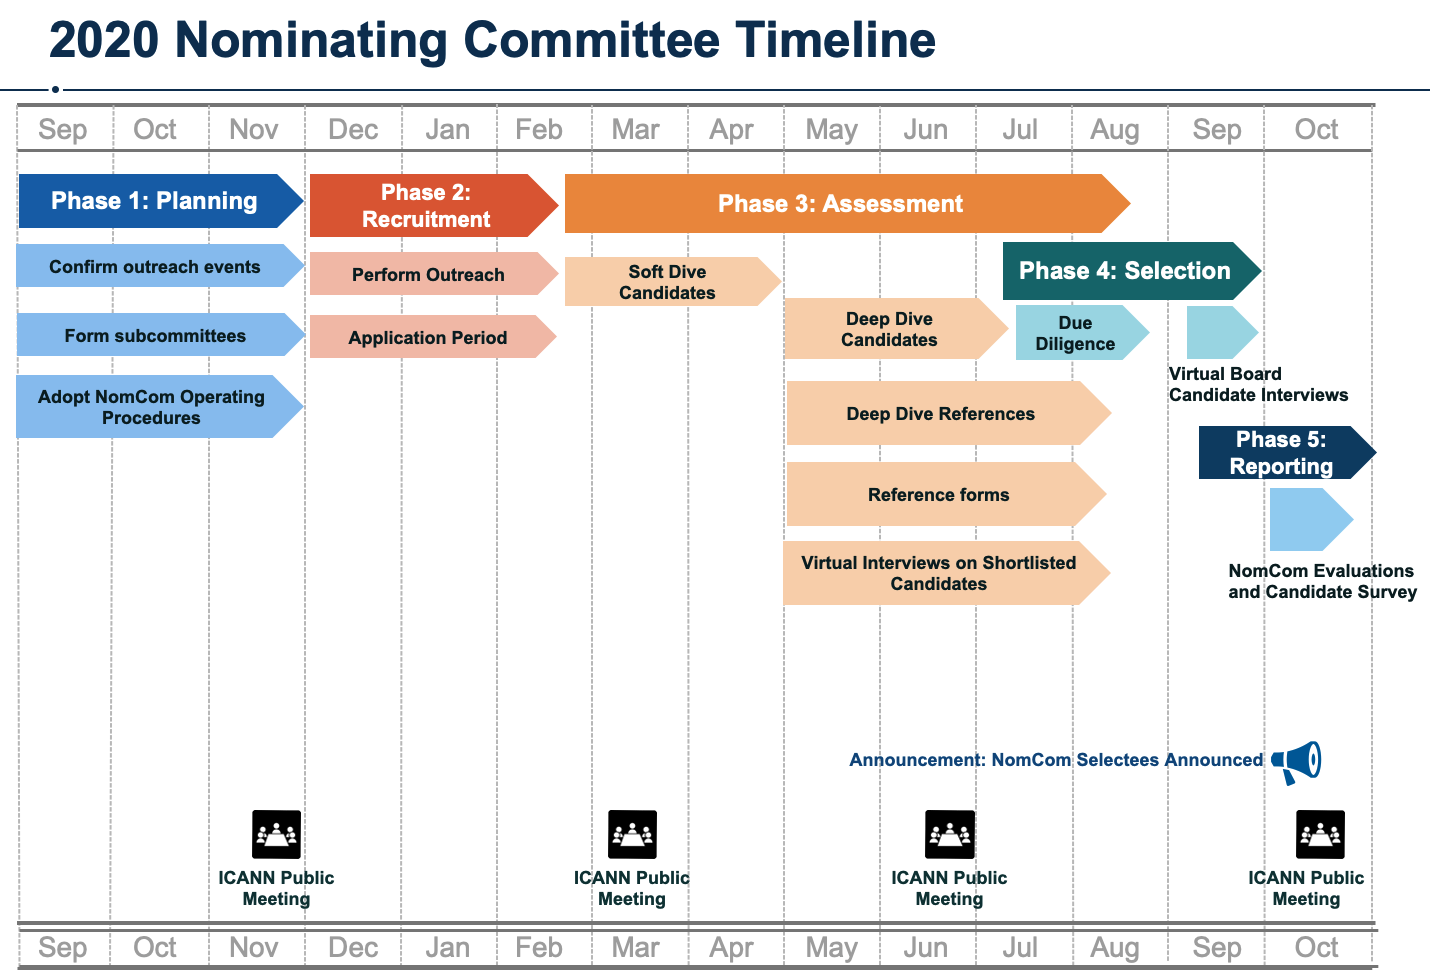 2020 Nominating Committee (NomCom) Timeline